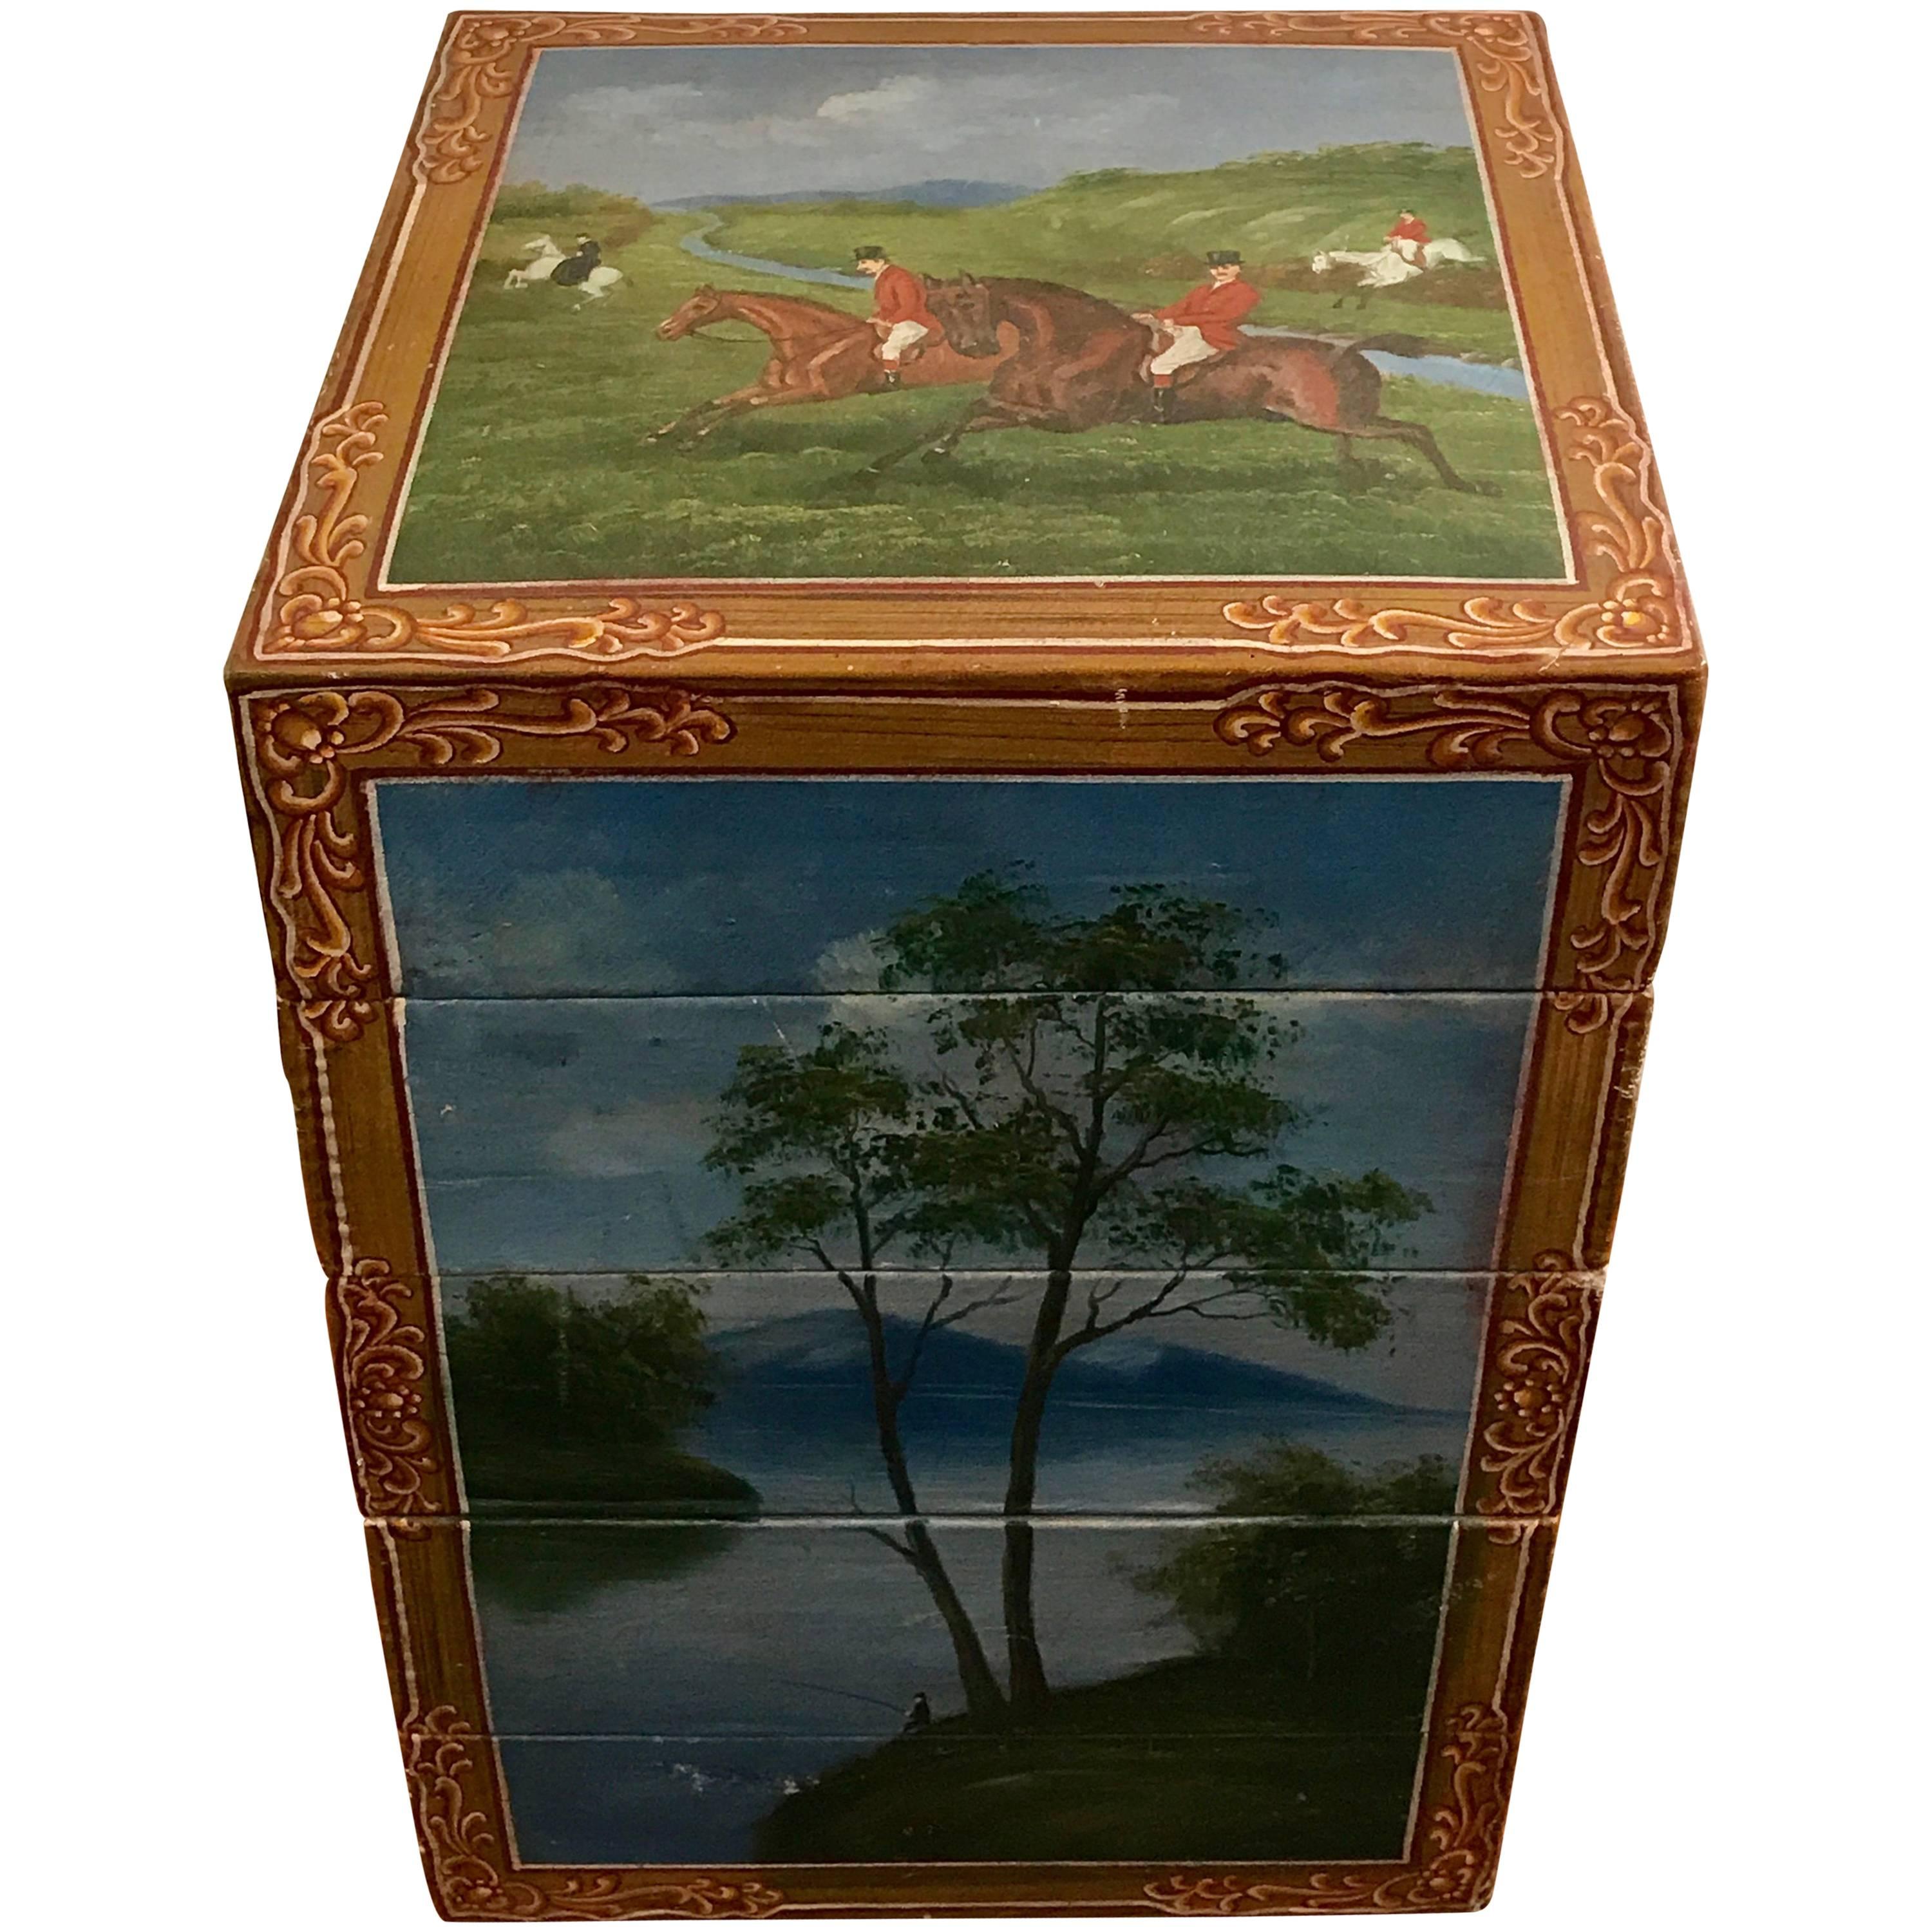 European Folk Art Hand-Painted Equestrian Theme Stacking Horse Tack Box